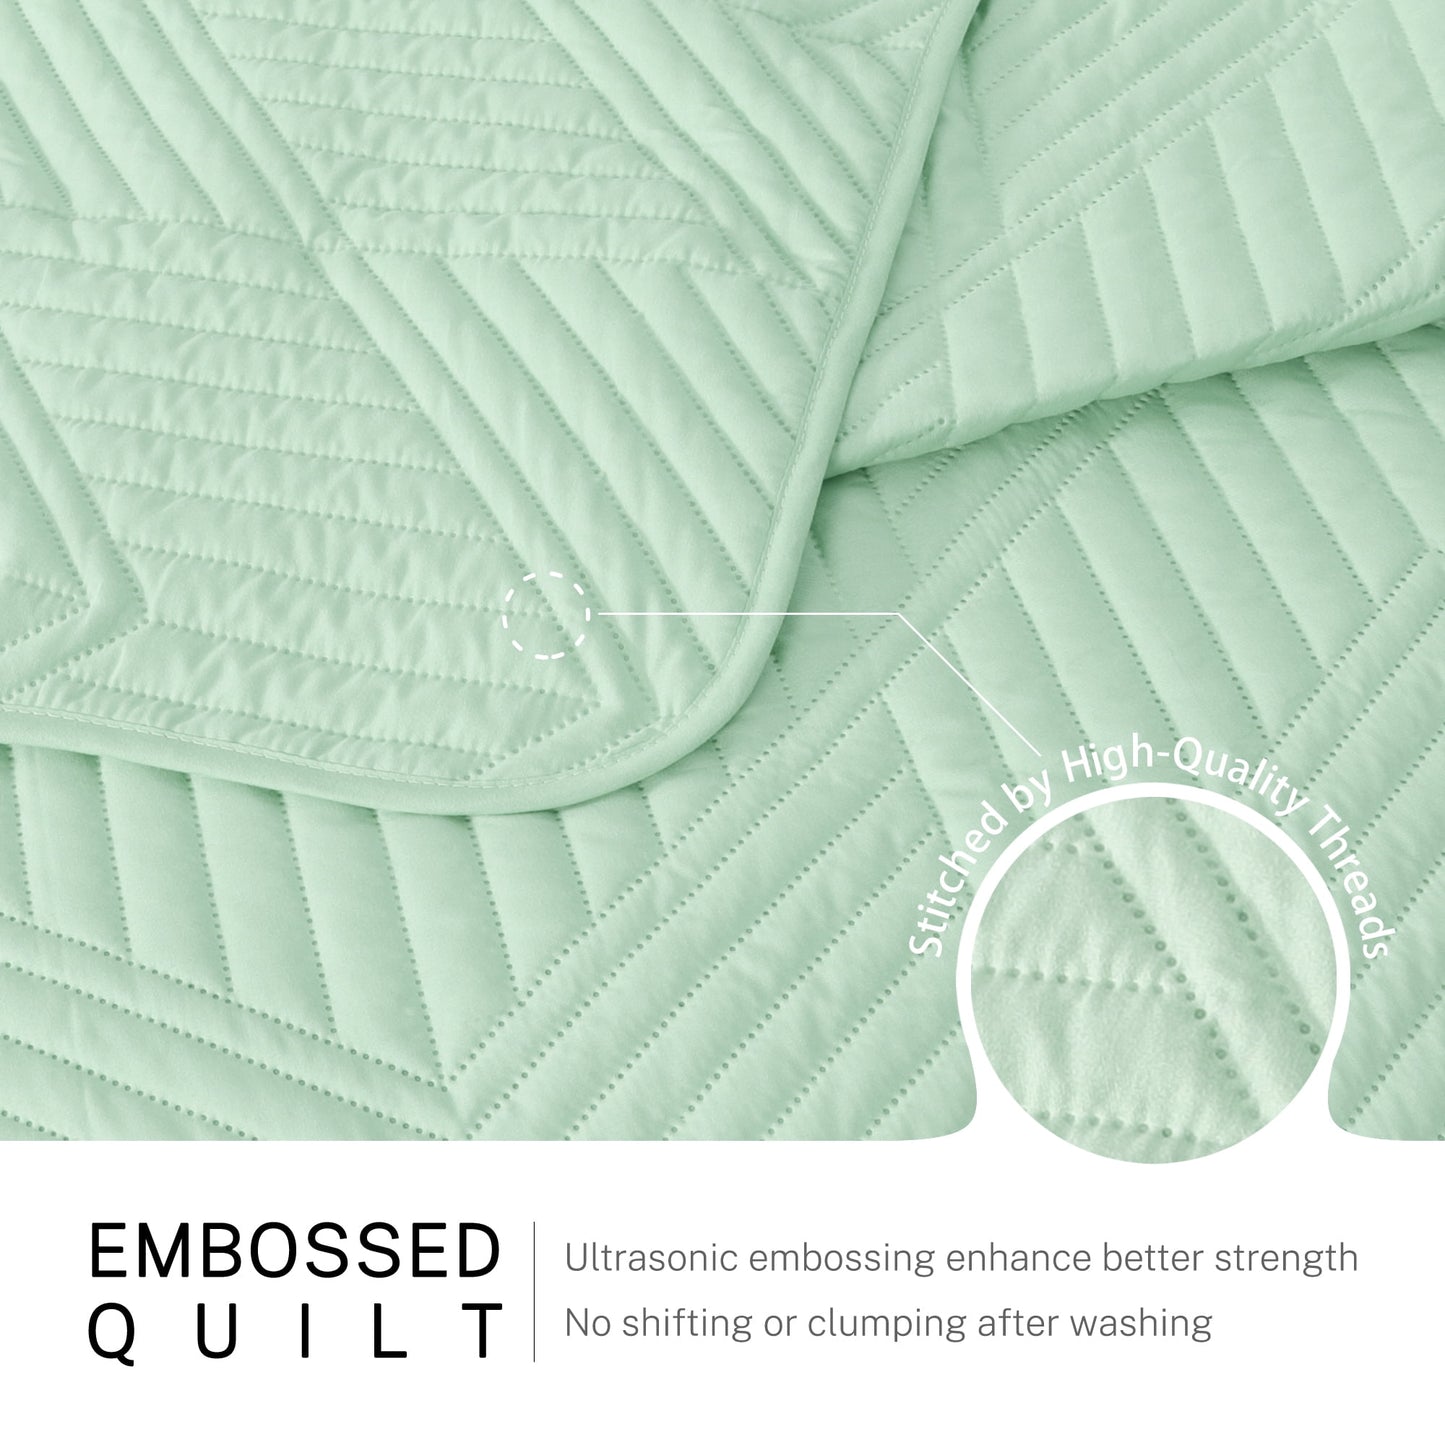 Exclusivo Mezcla Ultrasonic Twin Quilt Bedding Set, Lightweight Sage Green Bedspreads Soft Modern Geometric Coverlet Set for All Seasons (1 Quilt and 1 Pillow Sham)